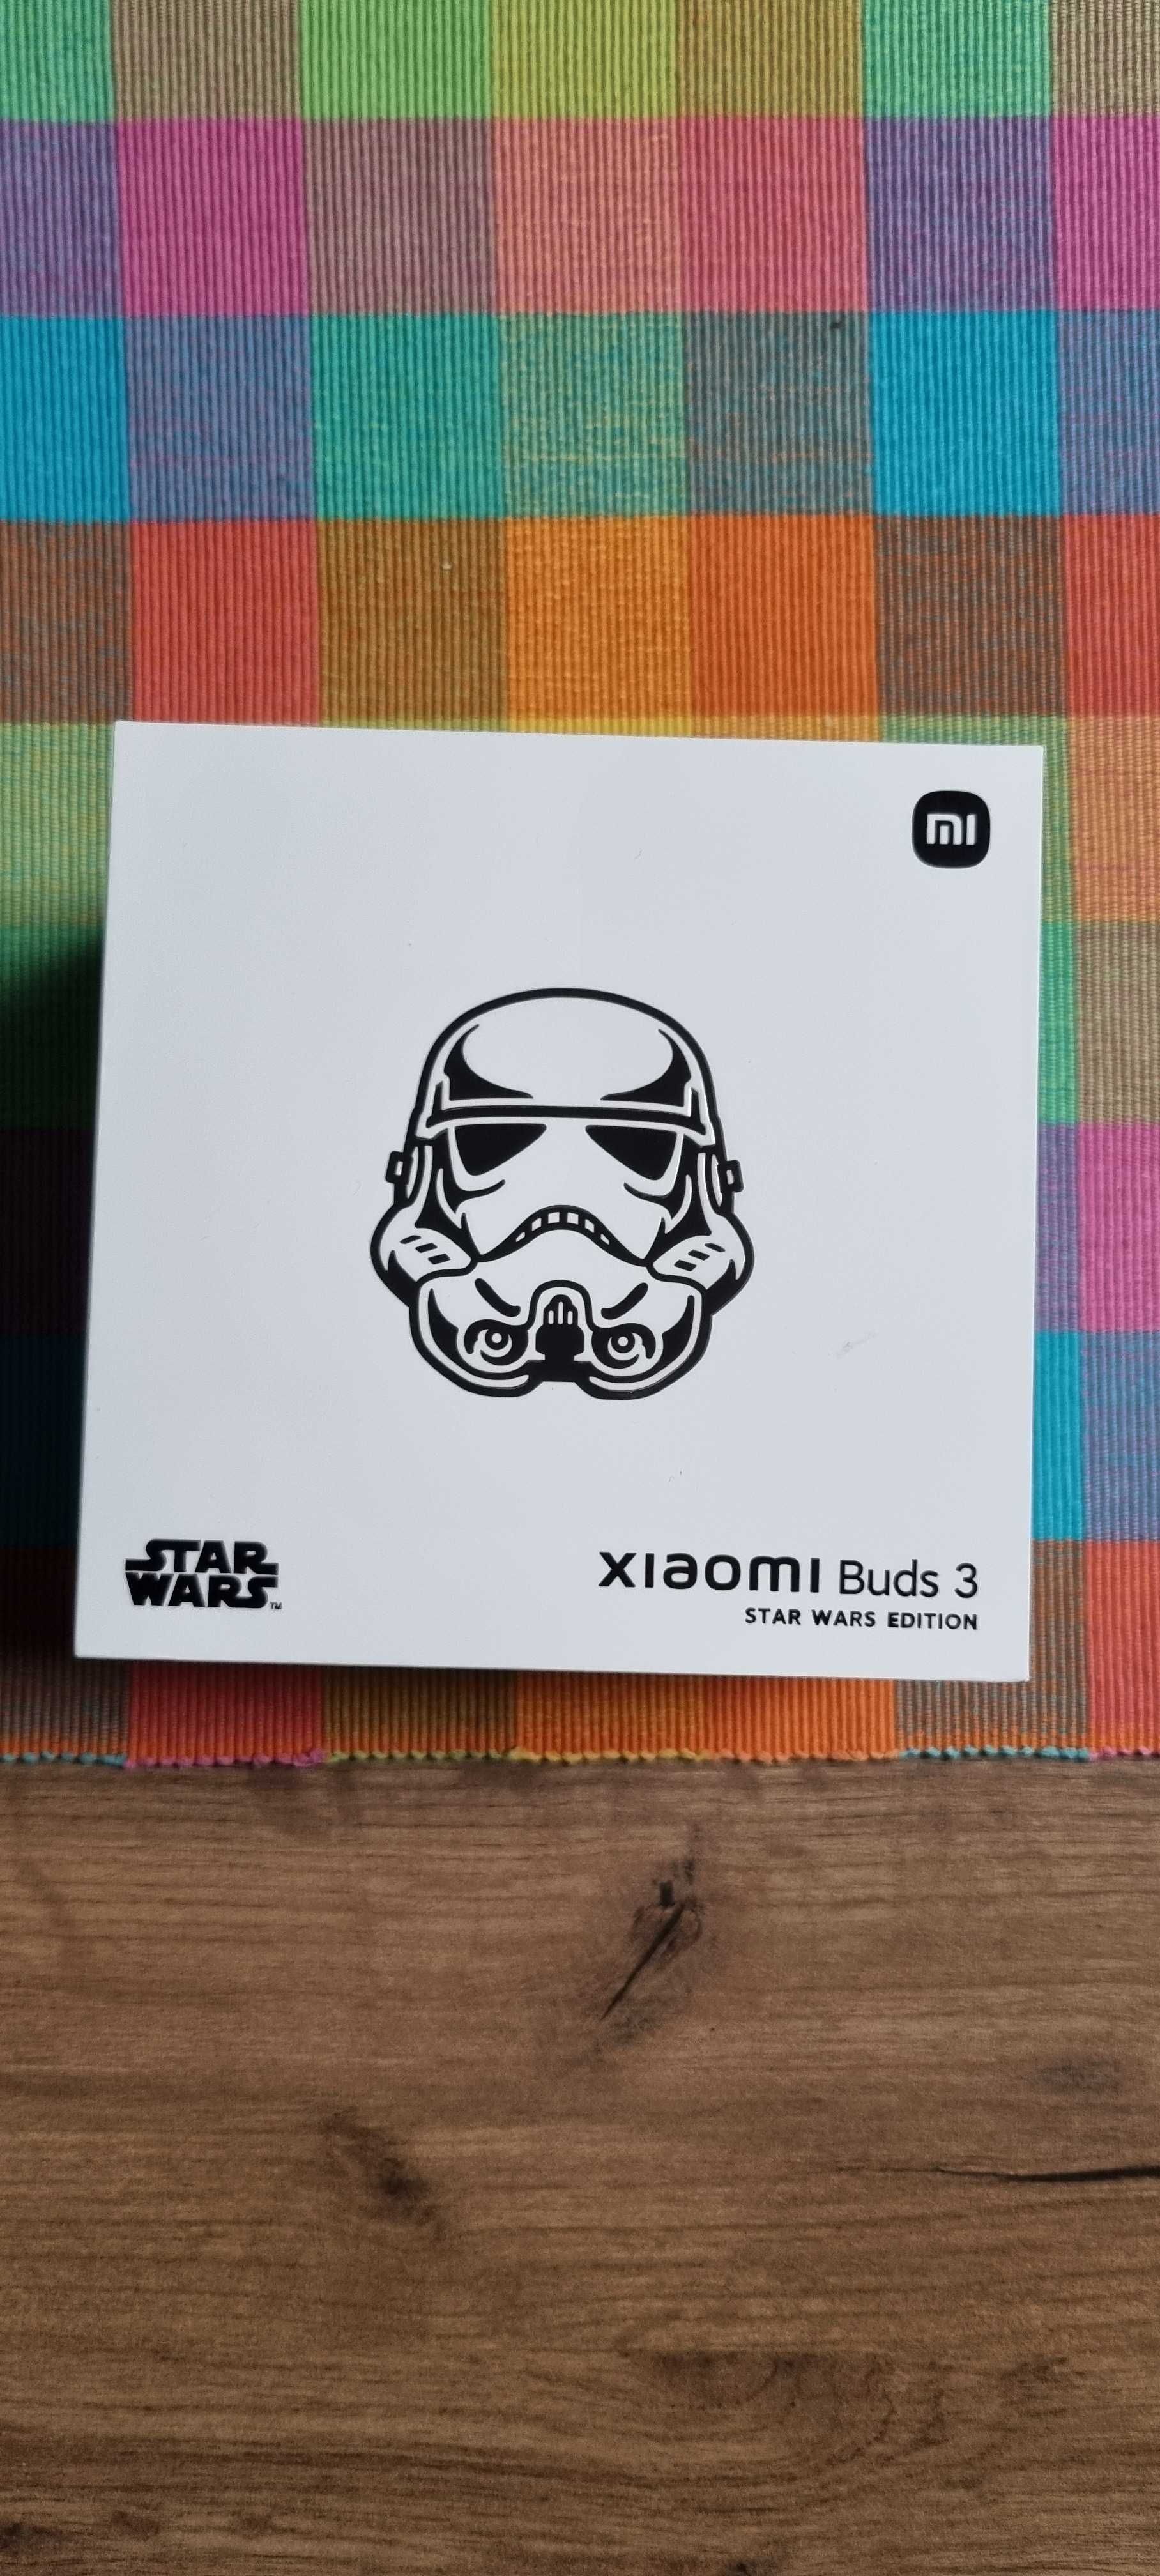 XIAOMI Buds 3 Star Wars Edition